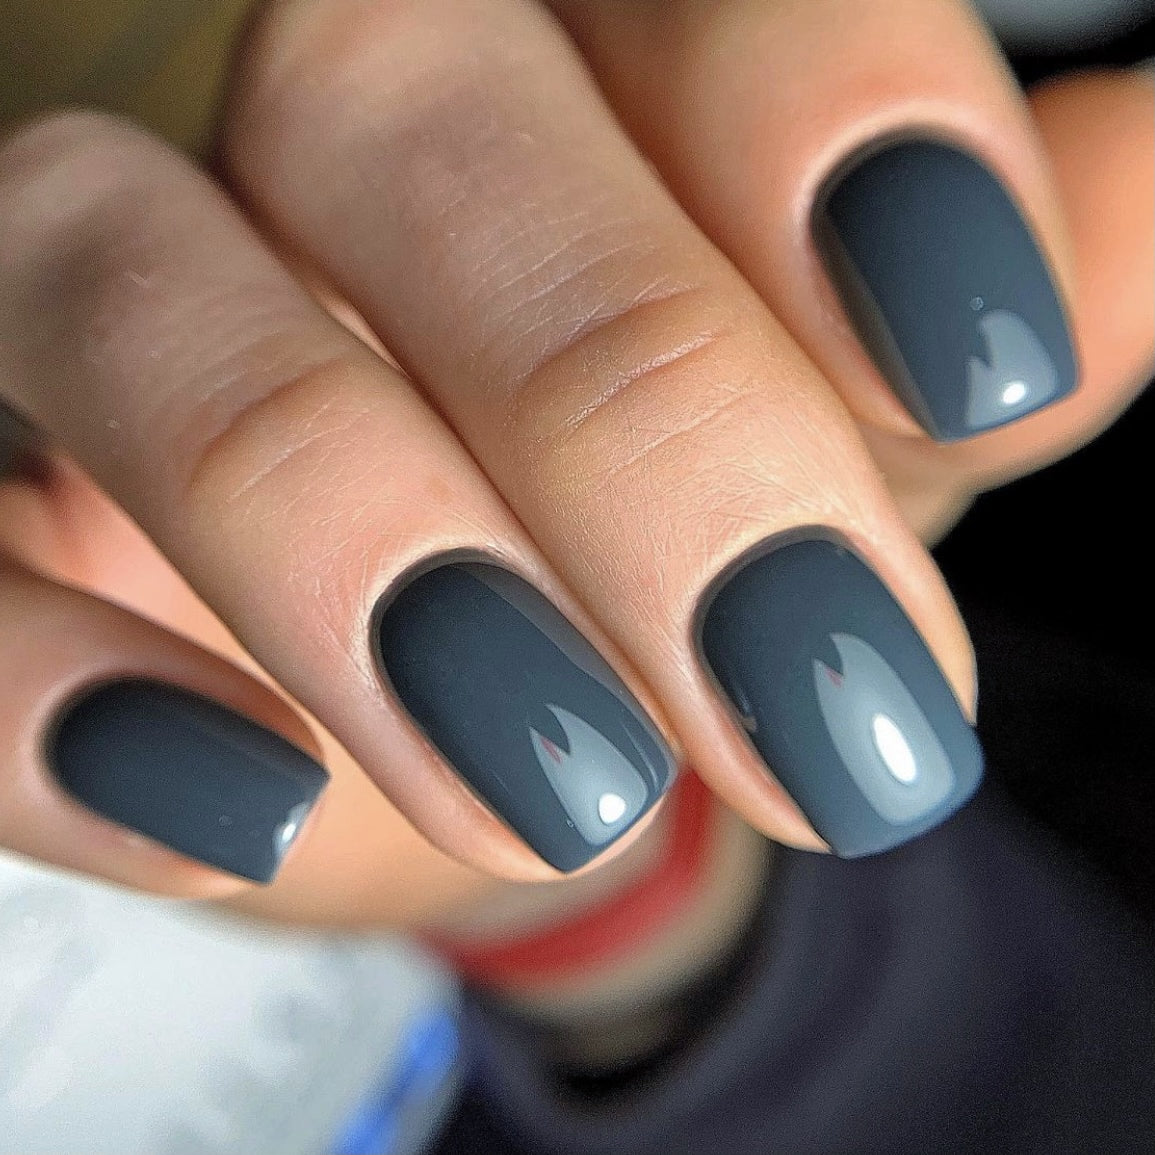 Slate blue fingernails | Cute gel nails, Nails, Gel nails